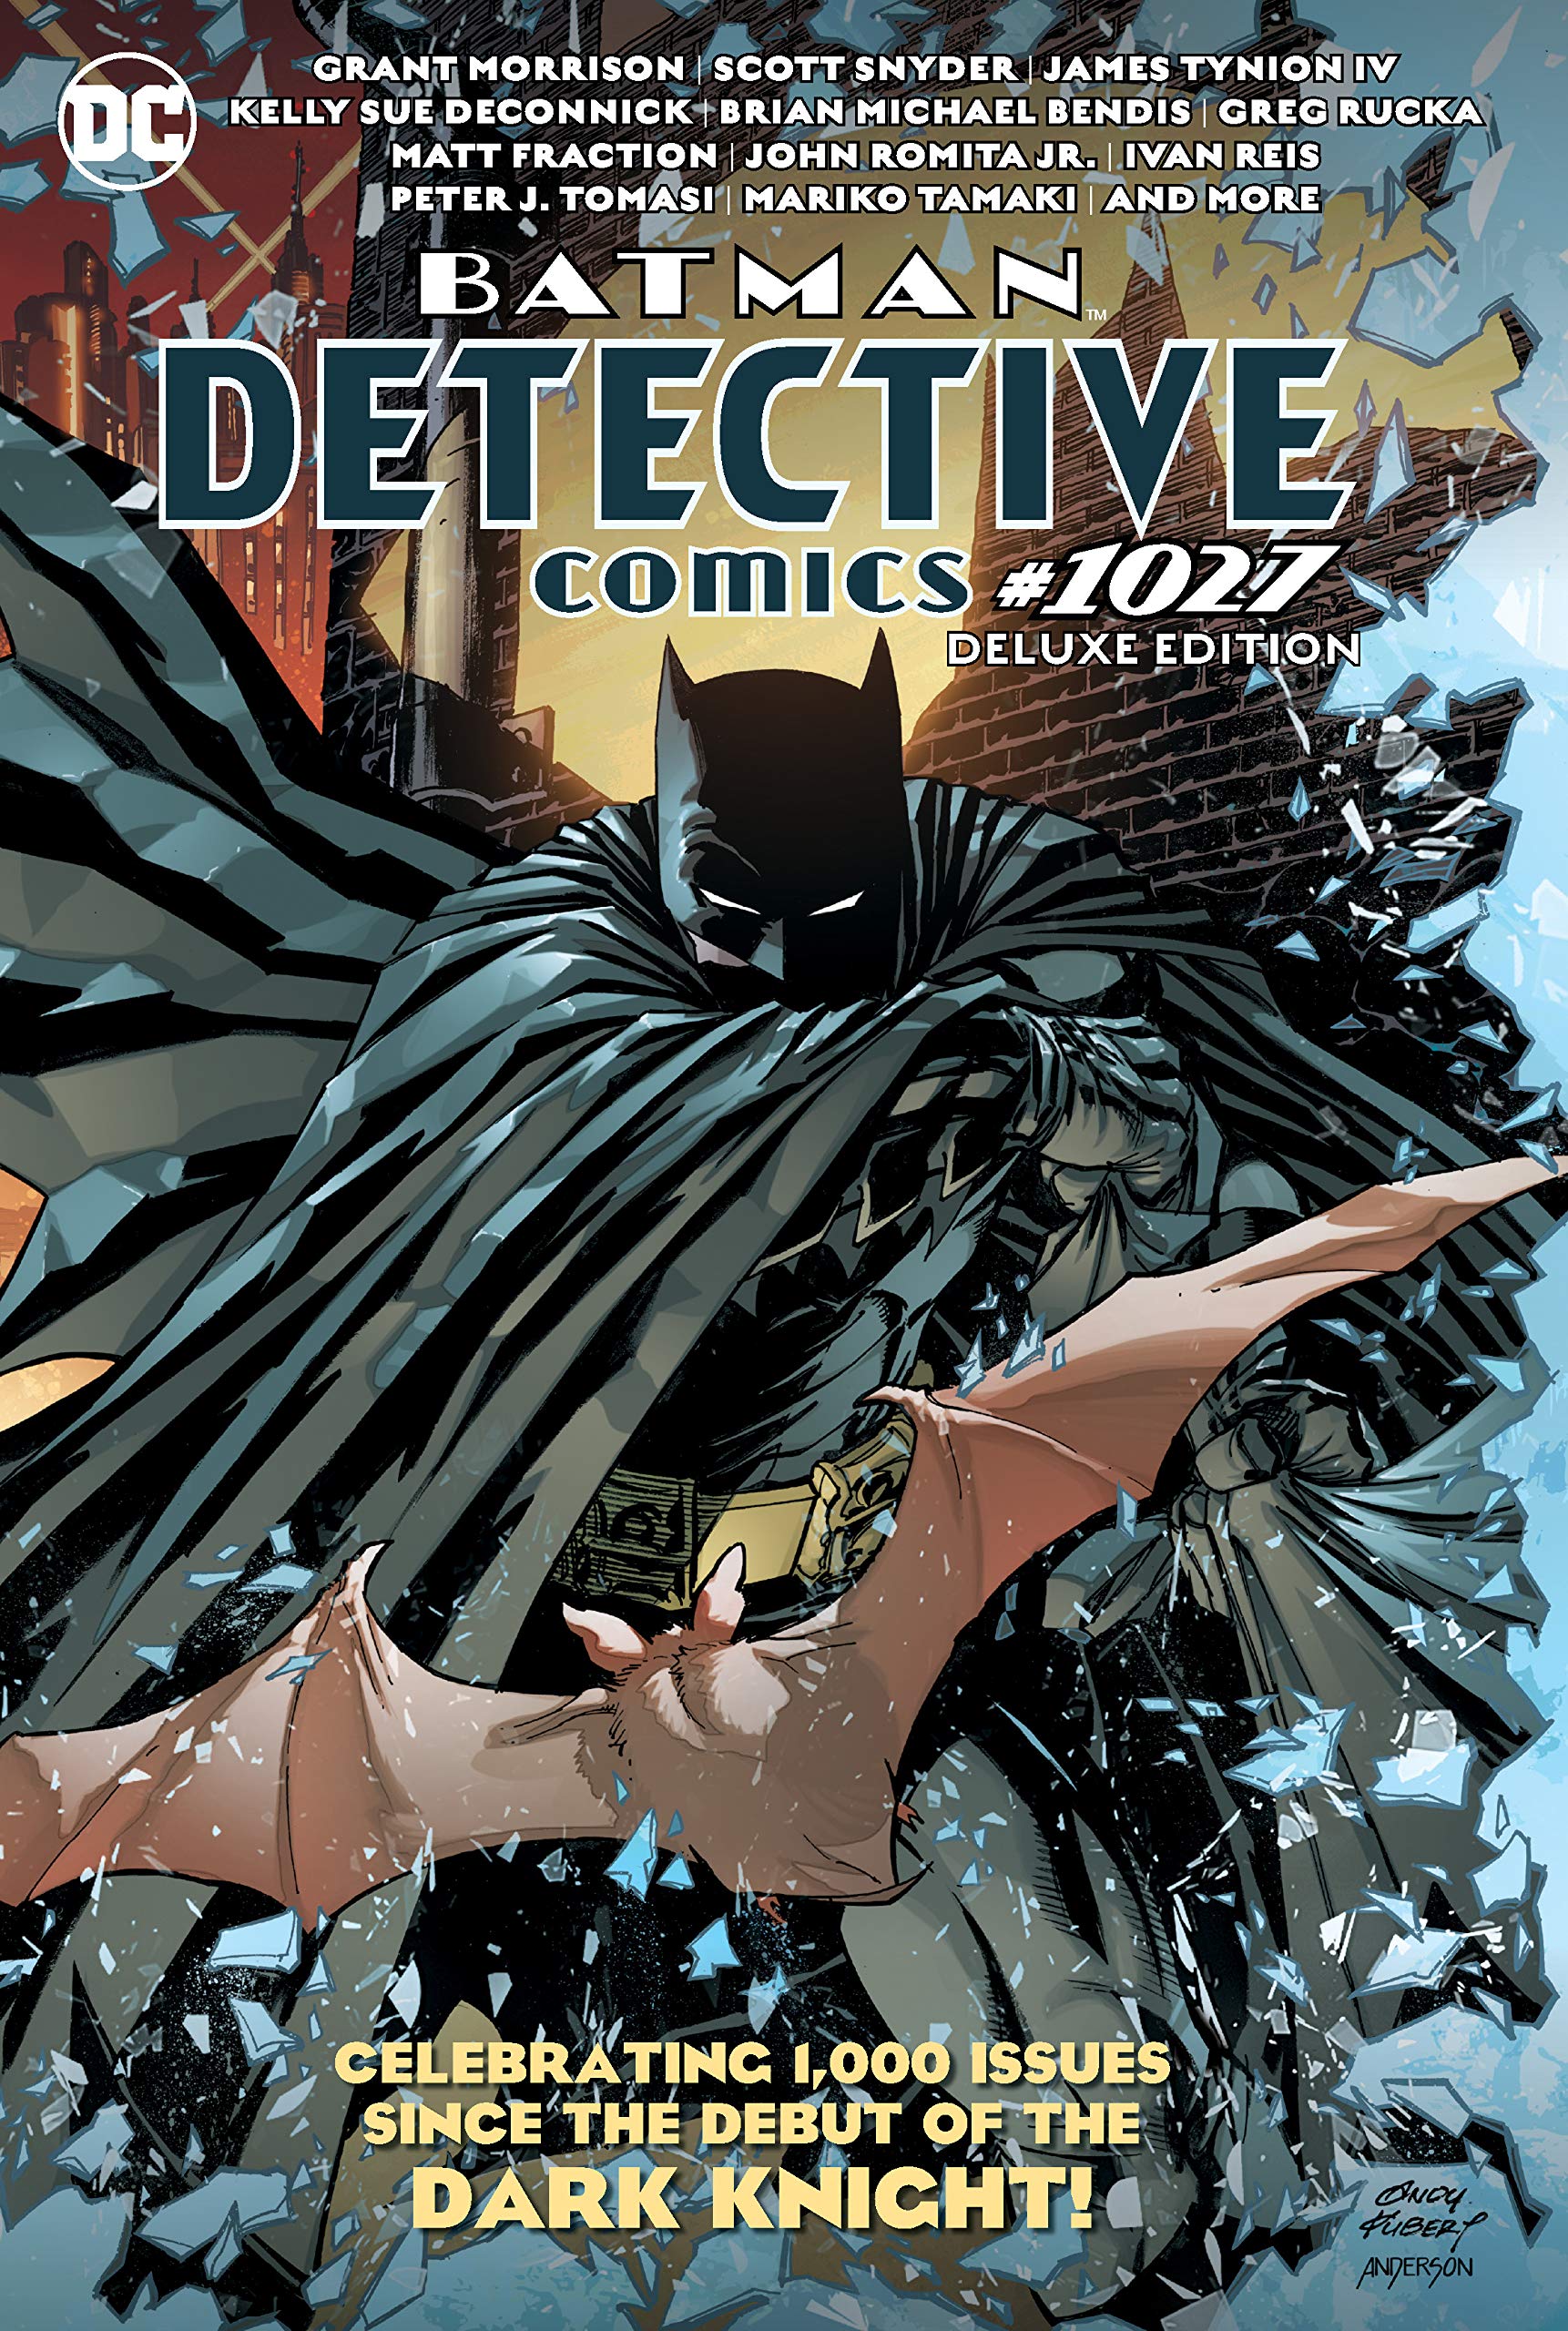 Batman: Detective Comics #1027 Deluxe Edition Hardcove - Graphic Novel - The Hooded Goblin